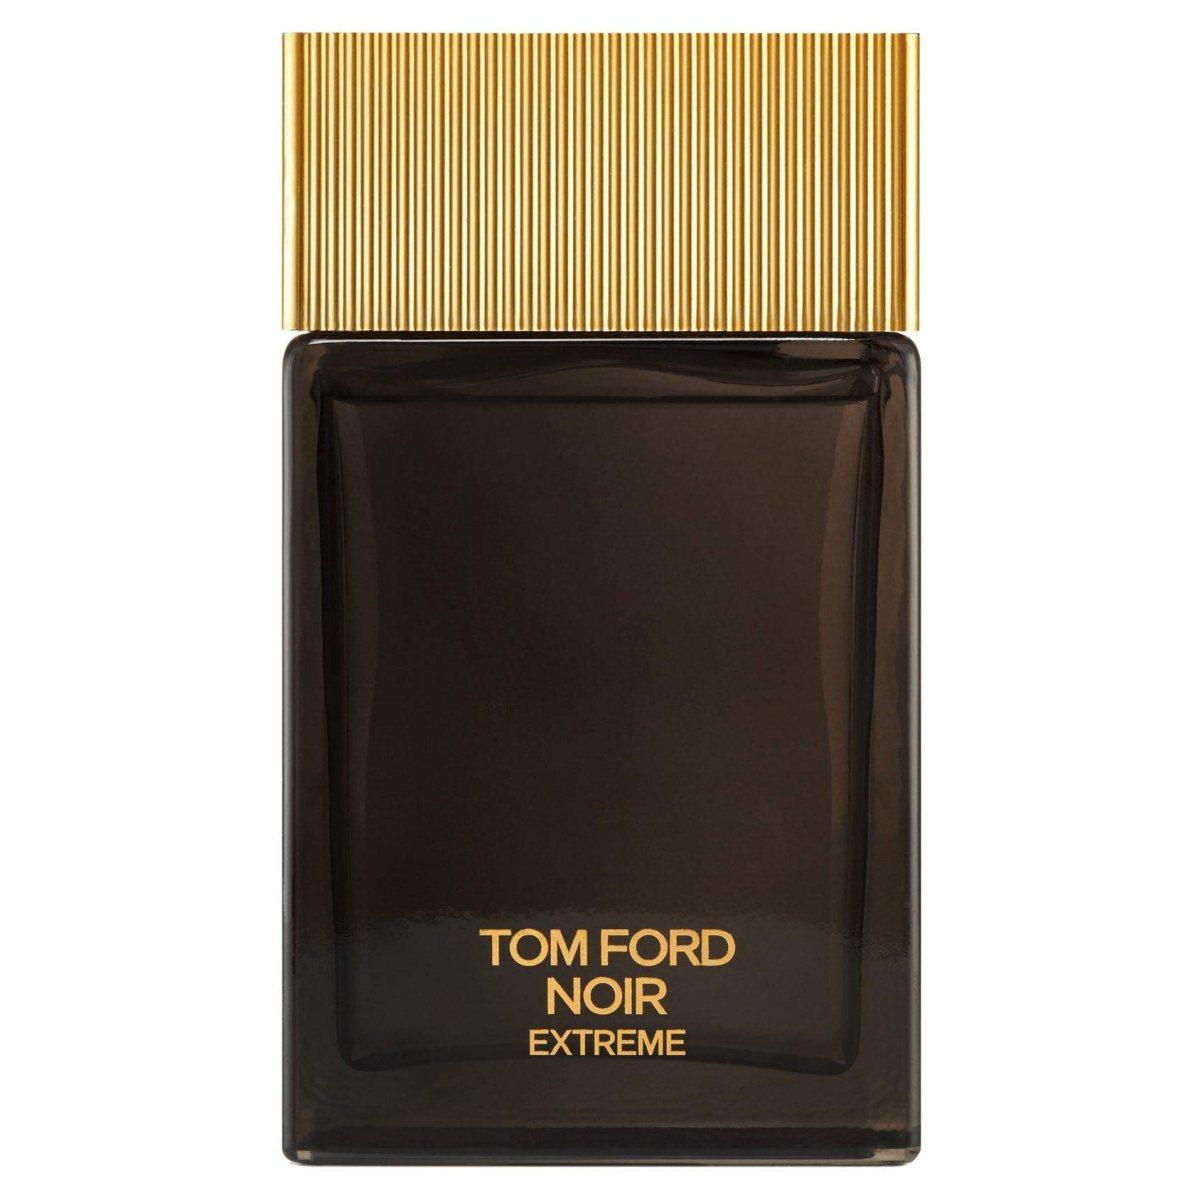 Tom ford noir extreme 100 ml